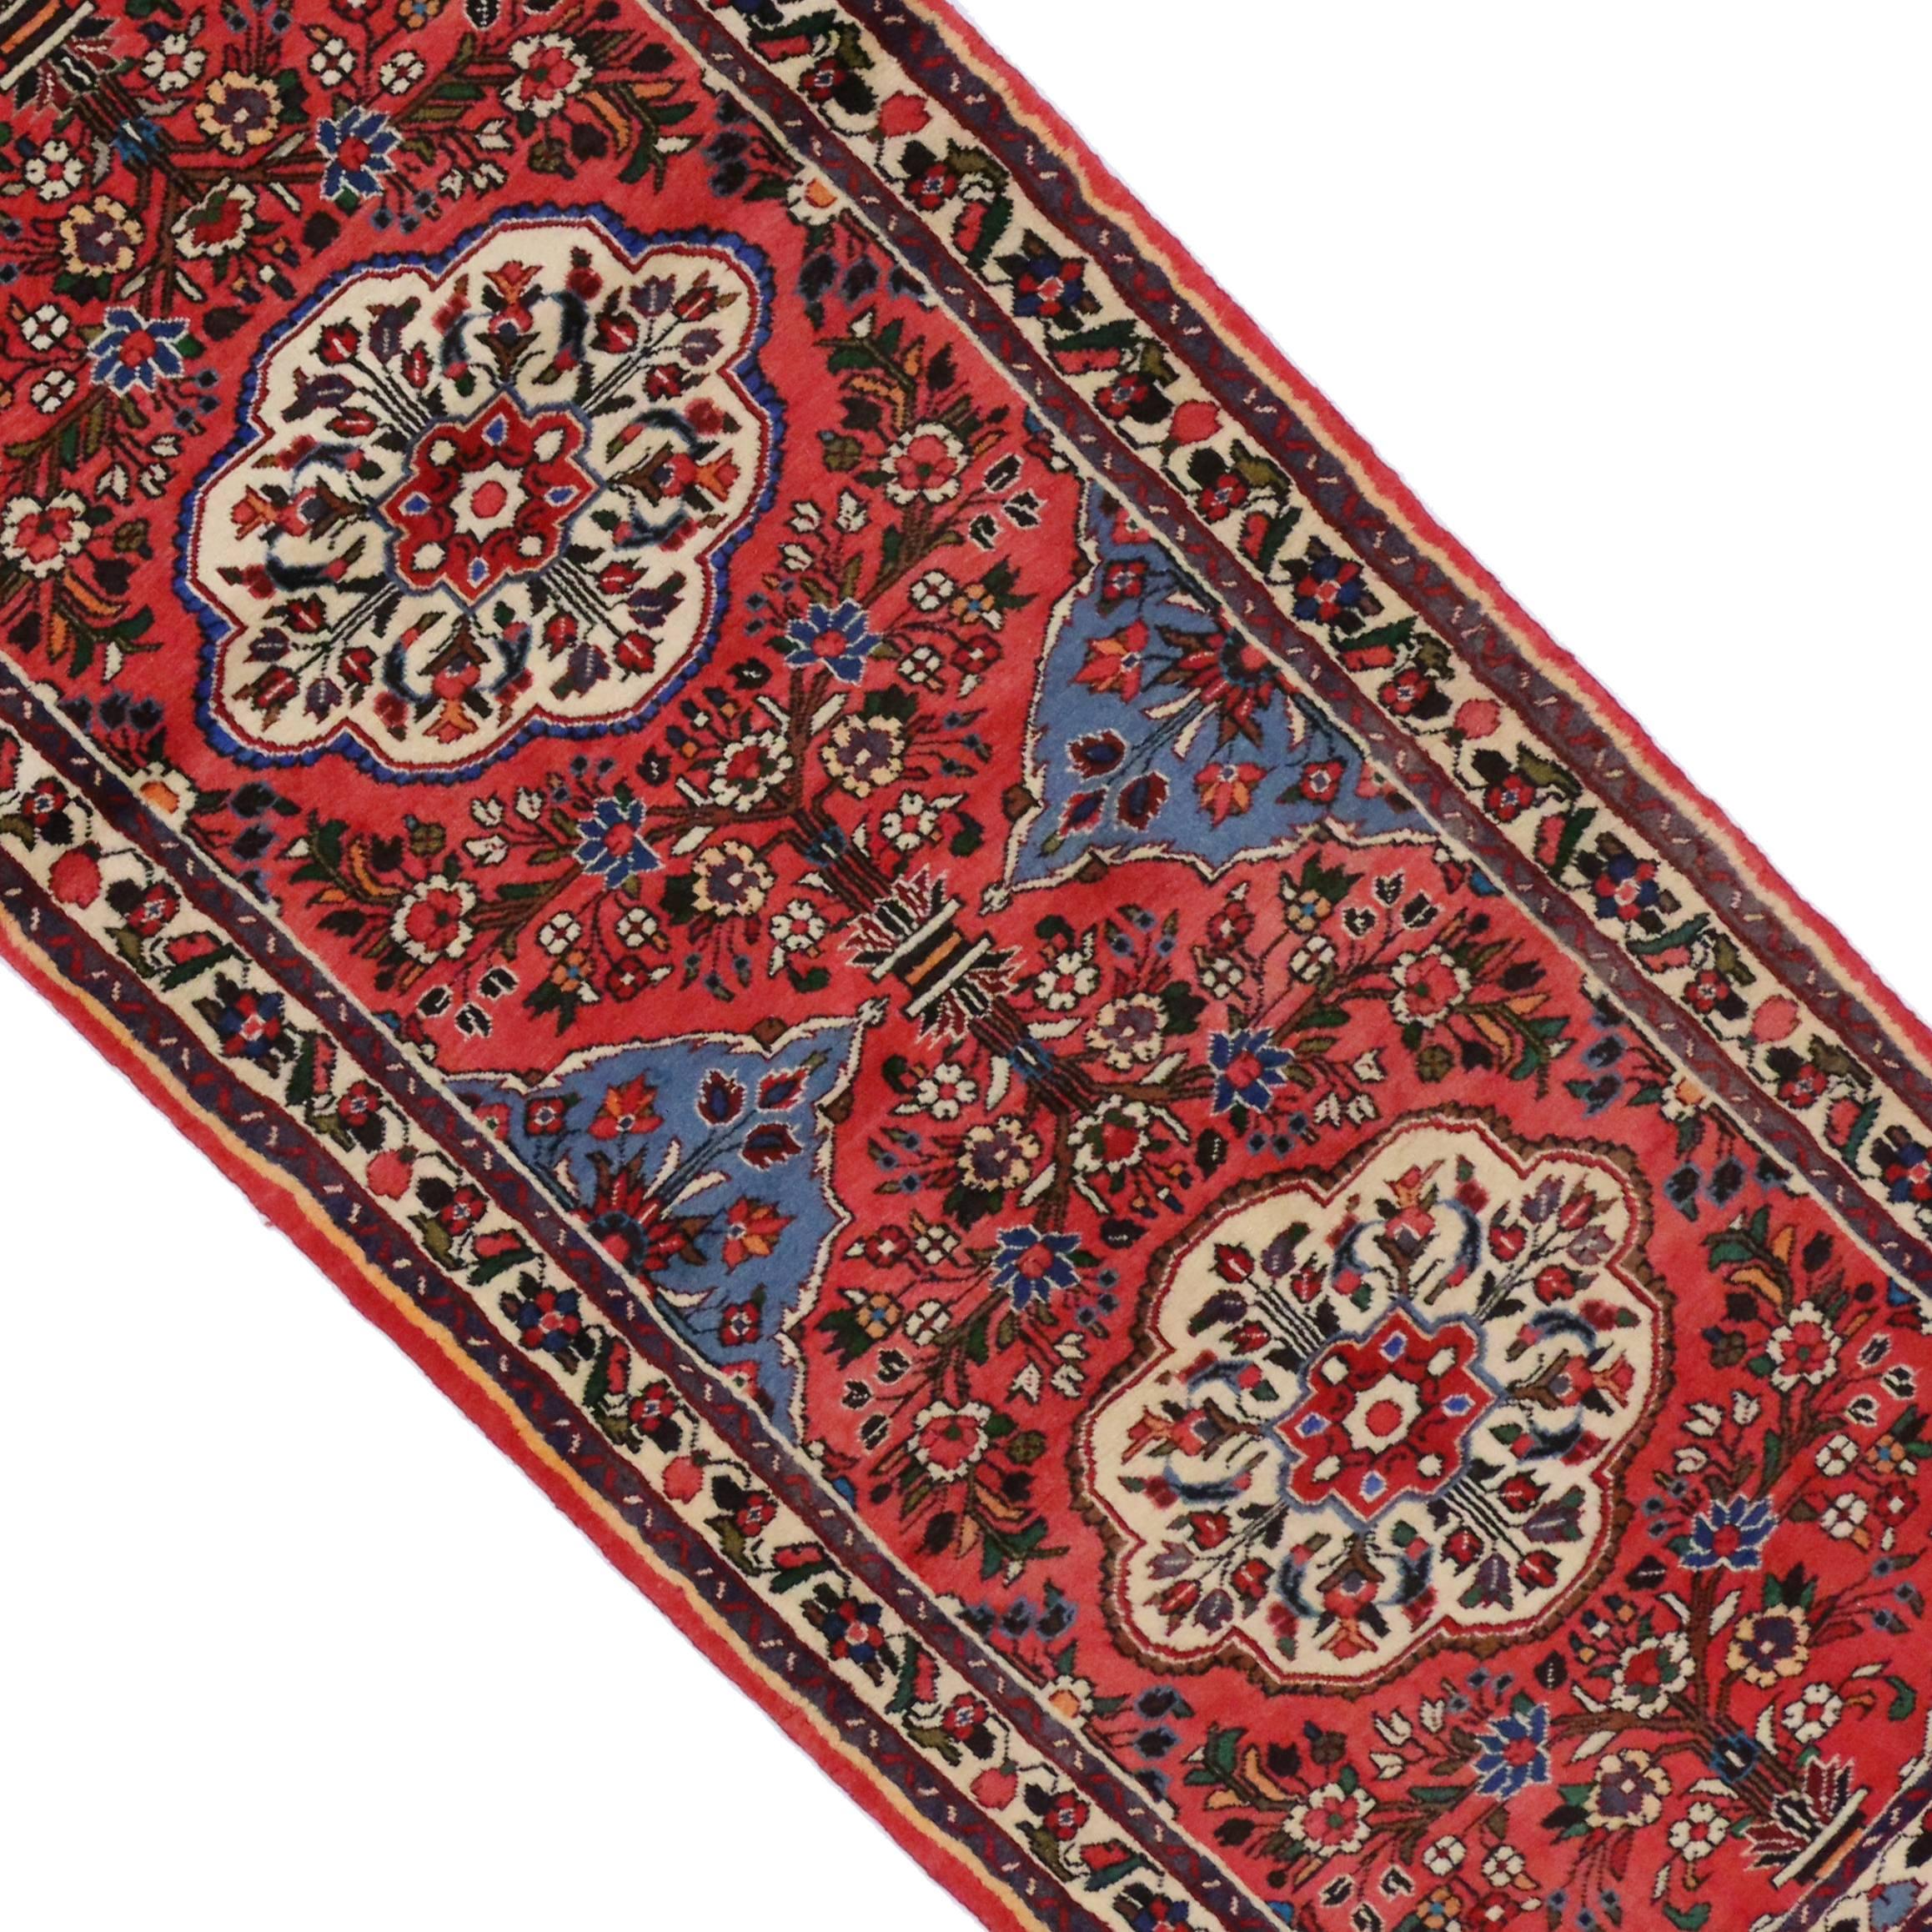 Wool Vintage Persian Roudbar Runner with Jacobean Style, Persian Hallway Runner